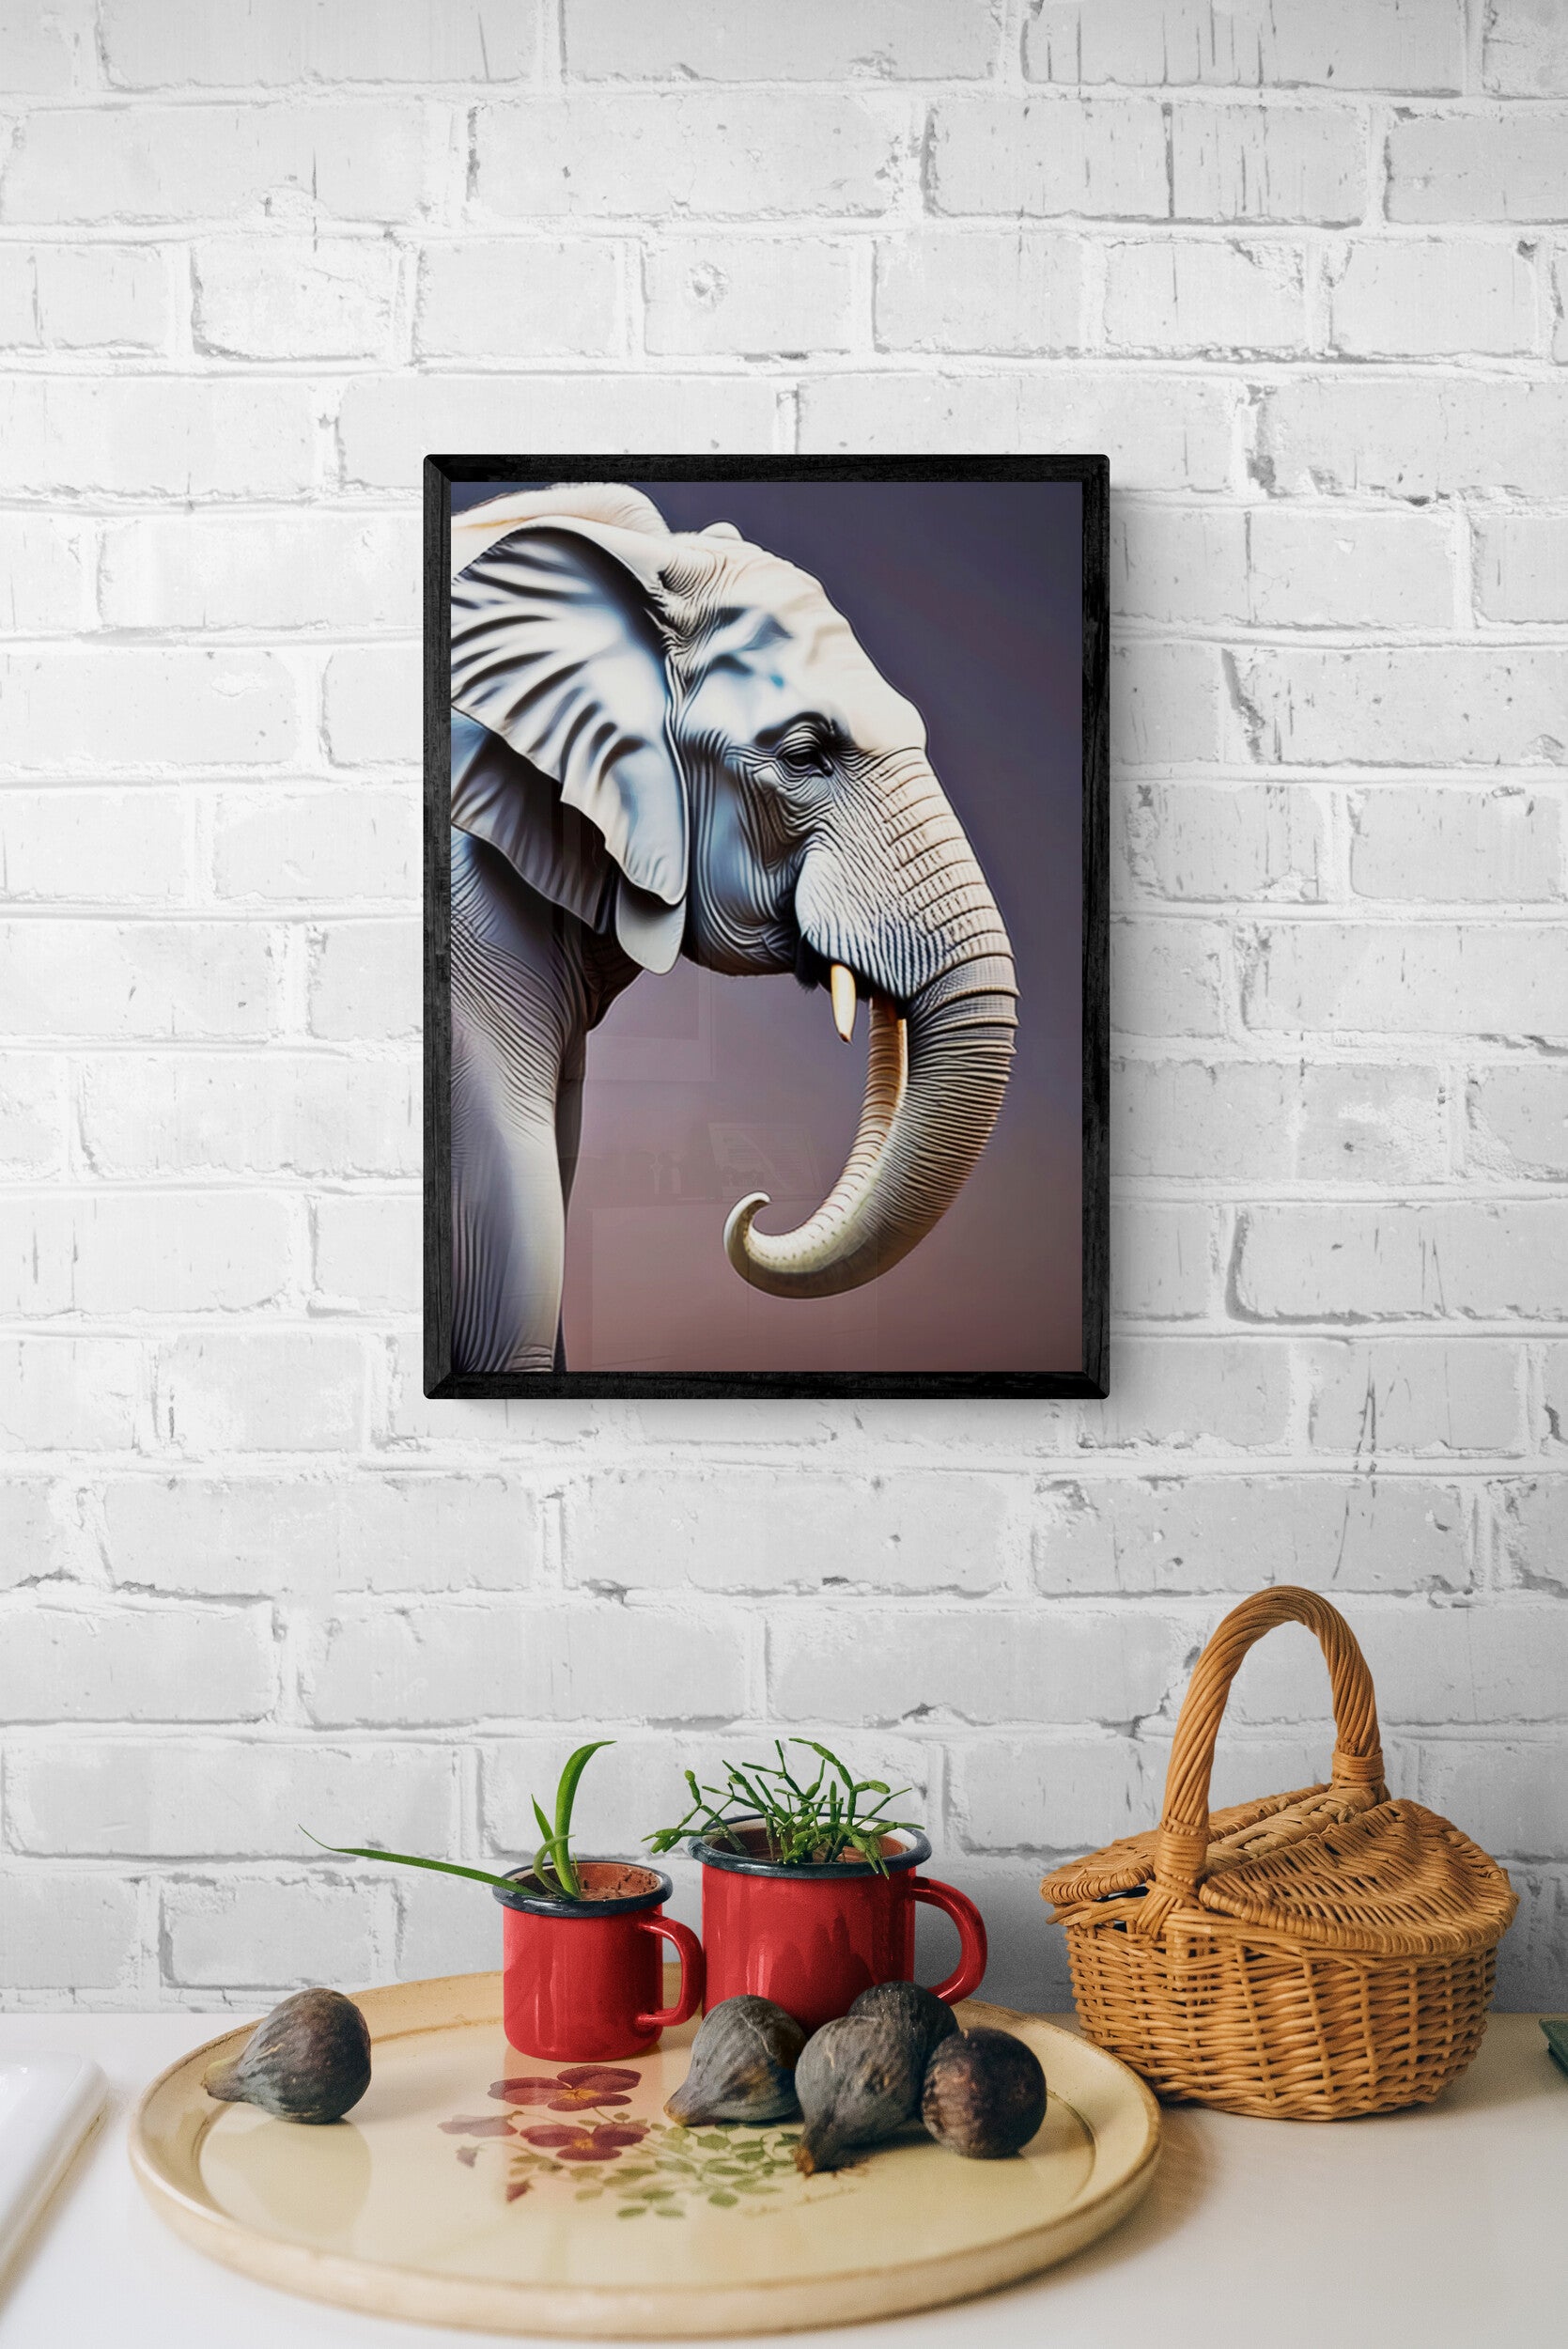 THINK AGAIN 2. Elephant portrait poster.